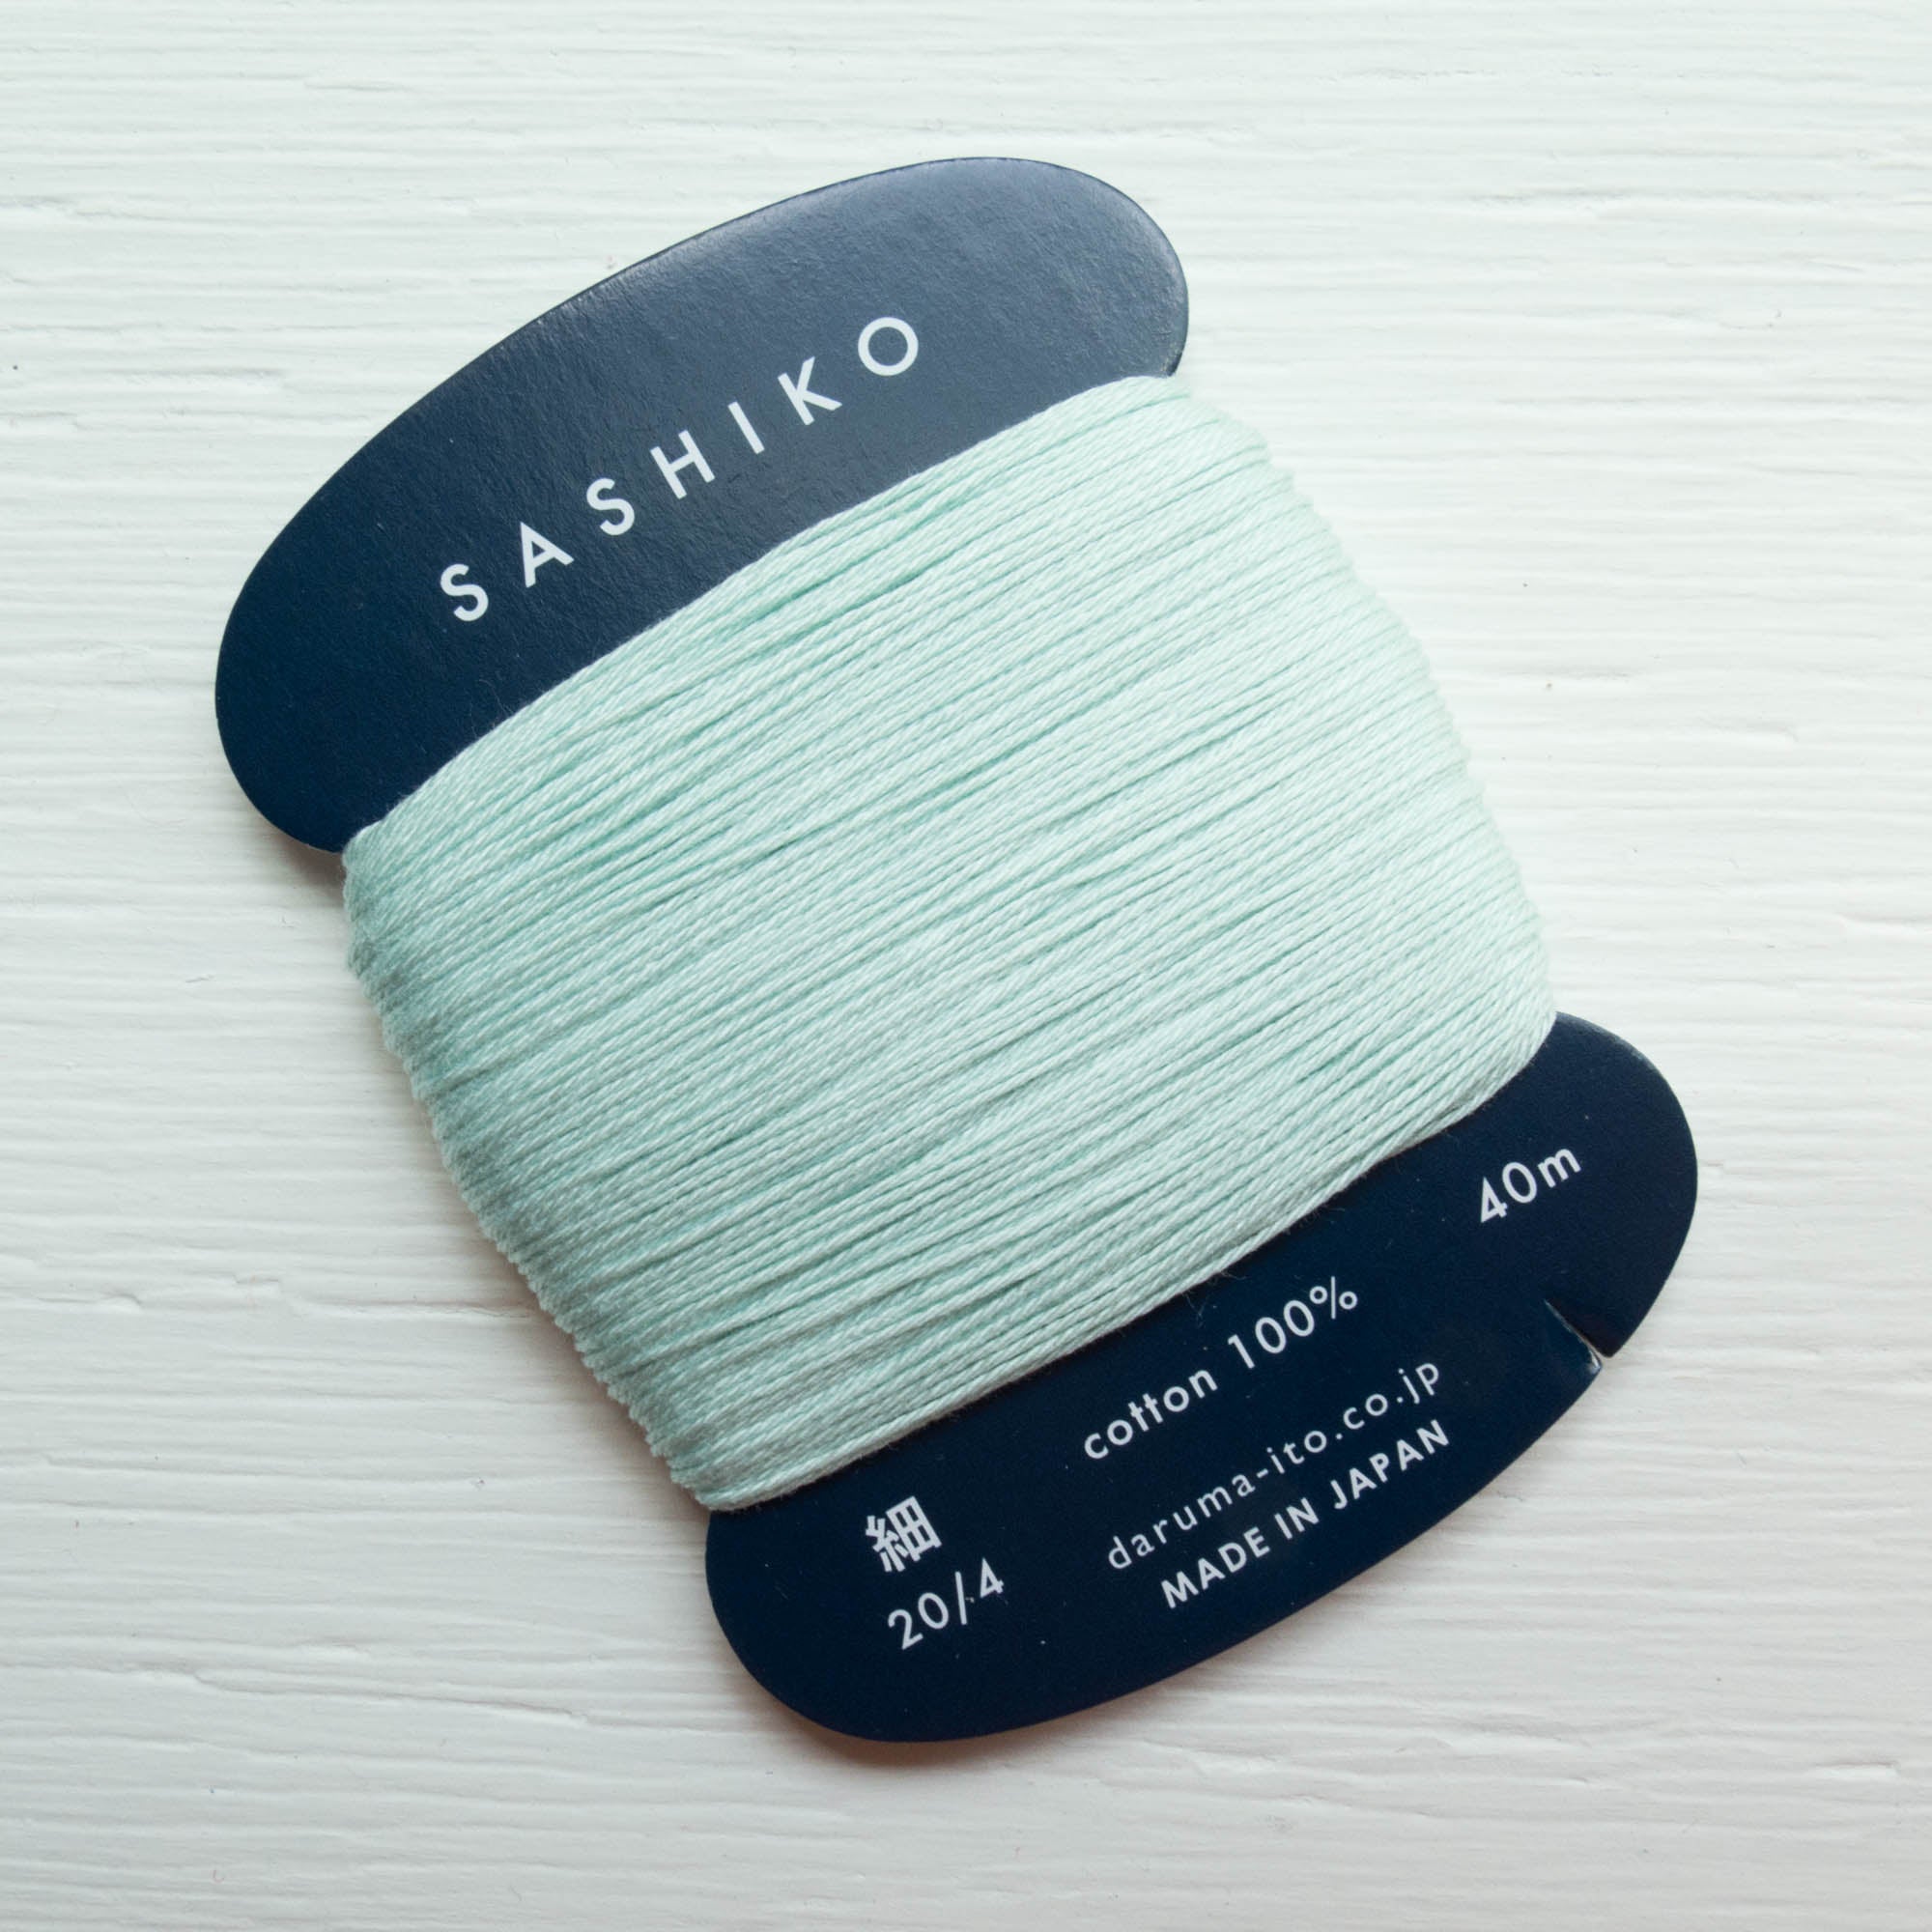 ORIM - Daruma - Sashiko Cotton Thread 20/4 - 0206 - Mint